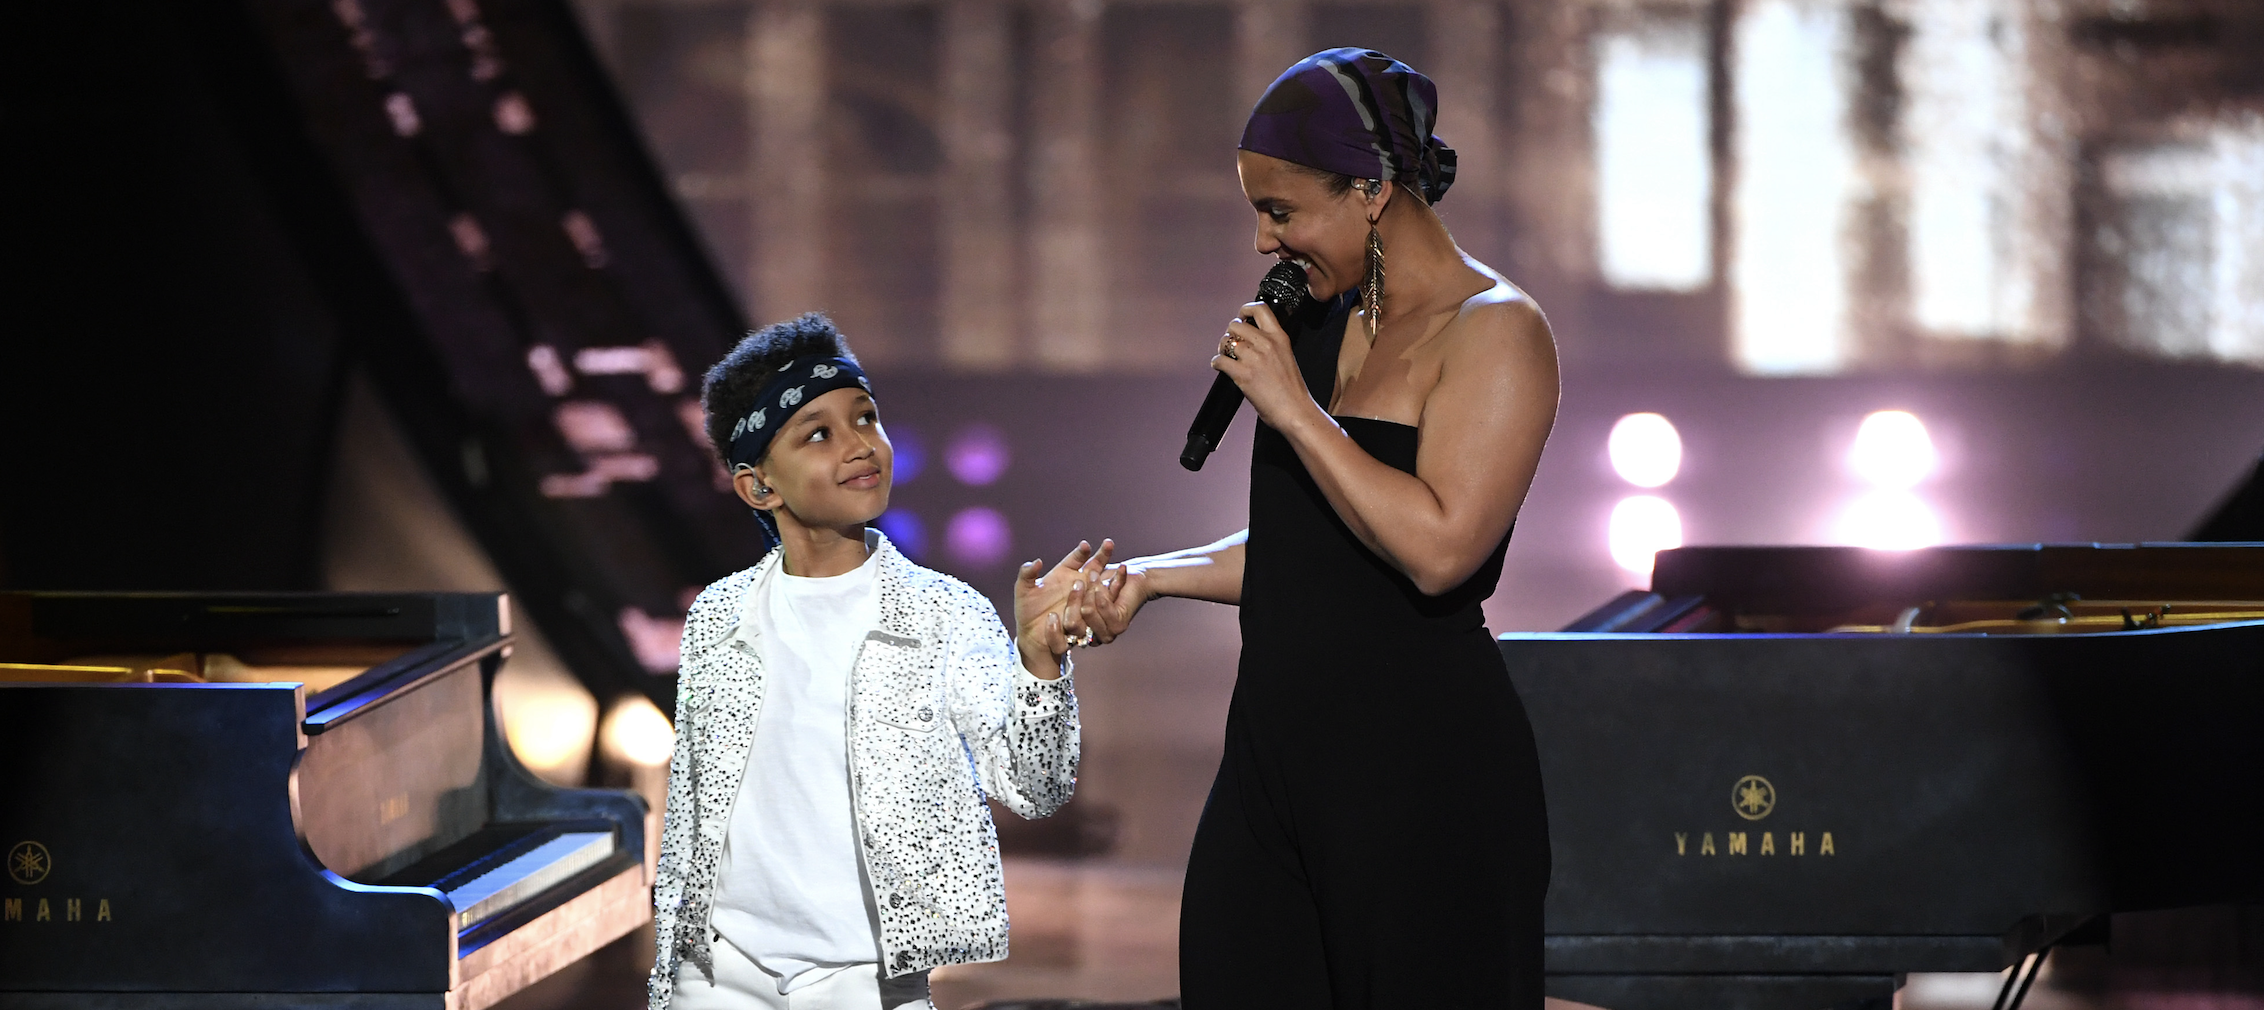 Alicia Keys And Swizz Beatz’s Son, Egypt, Is A Piano Prodigy